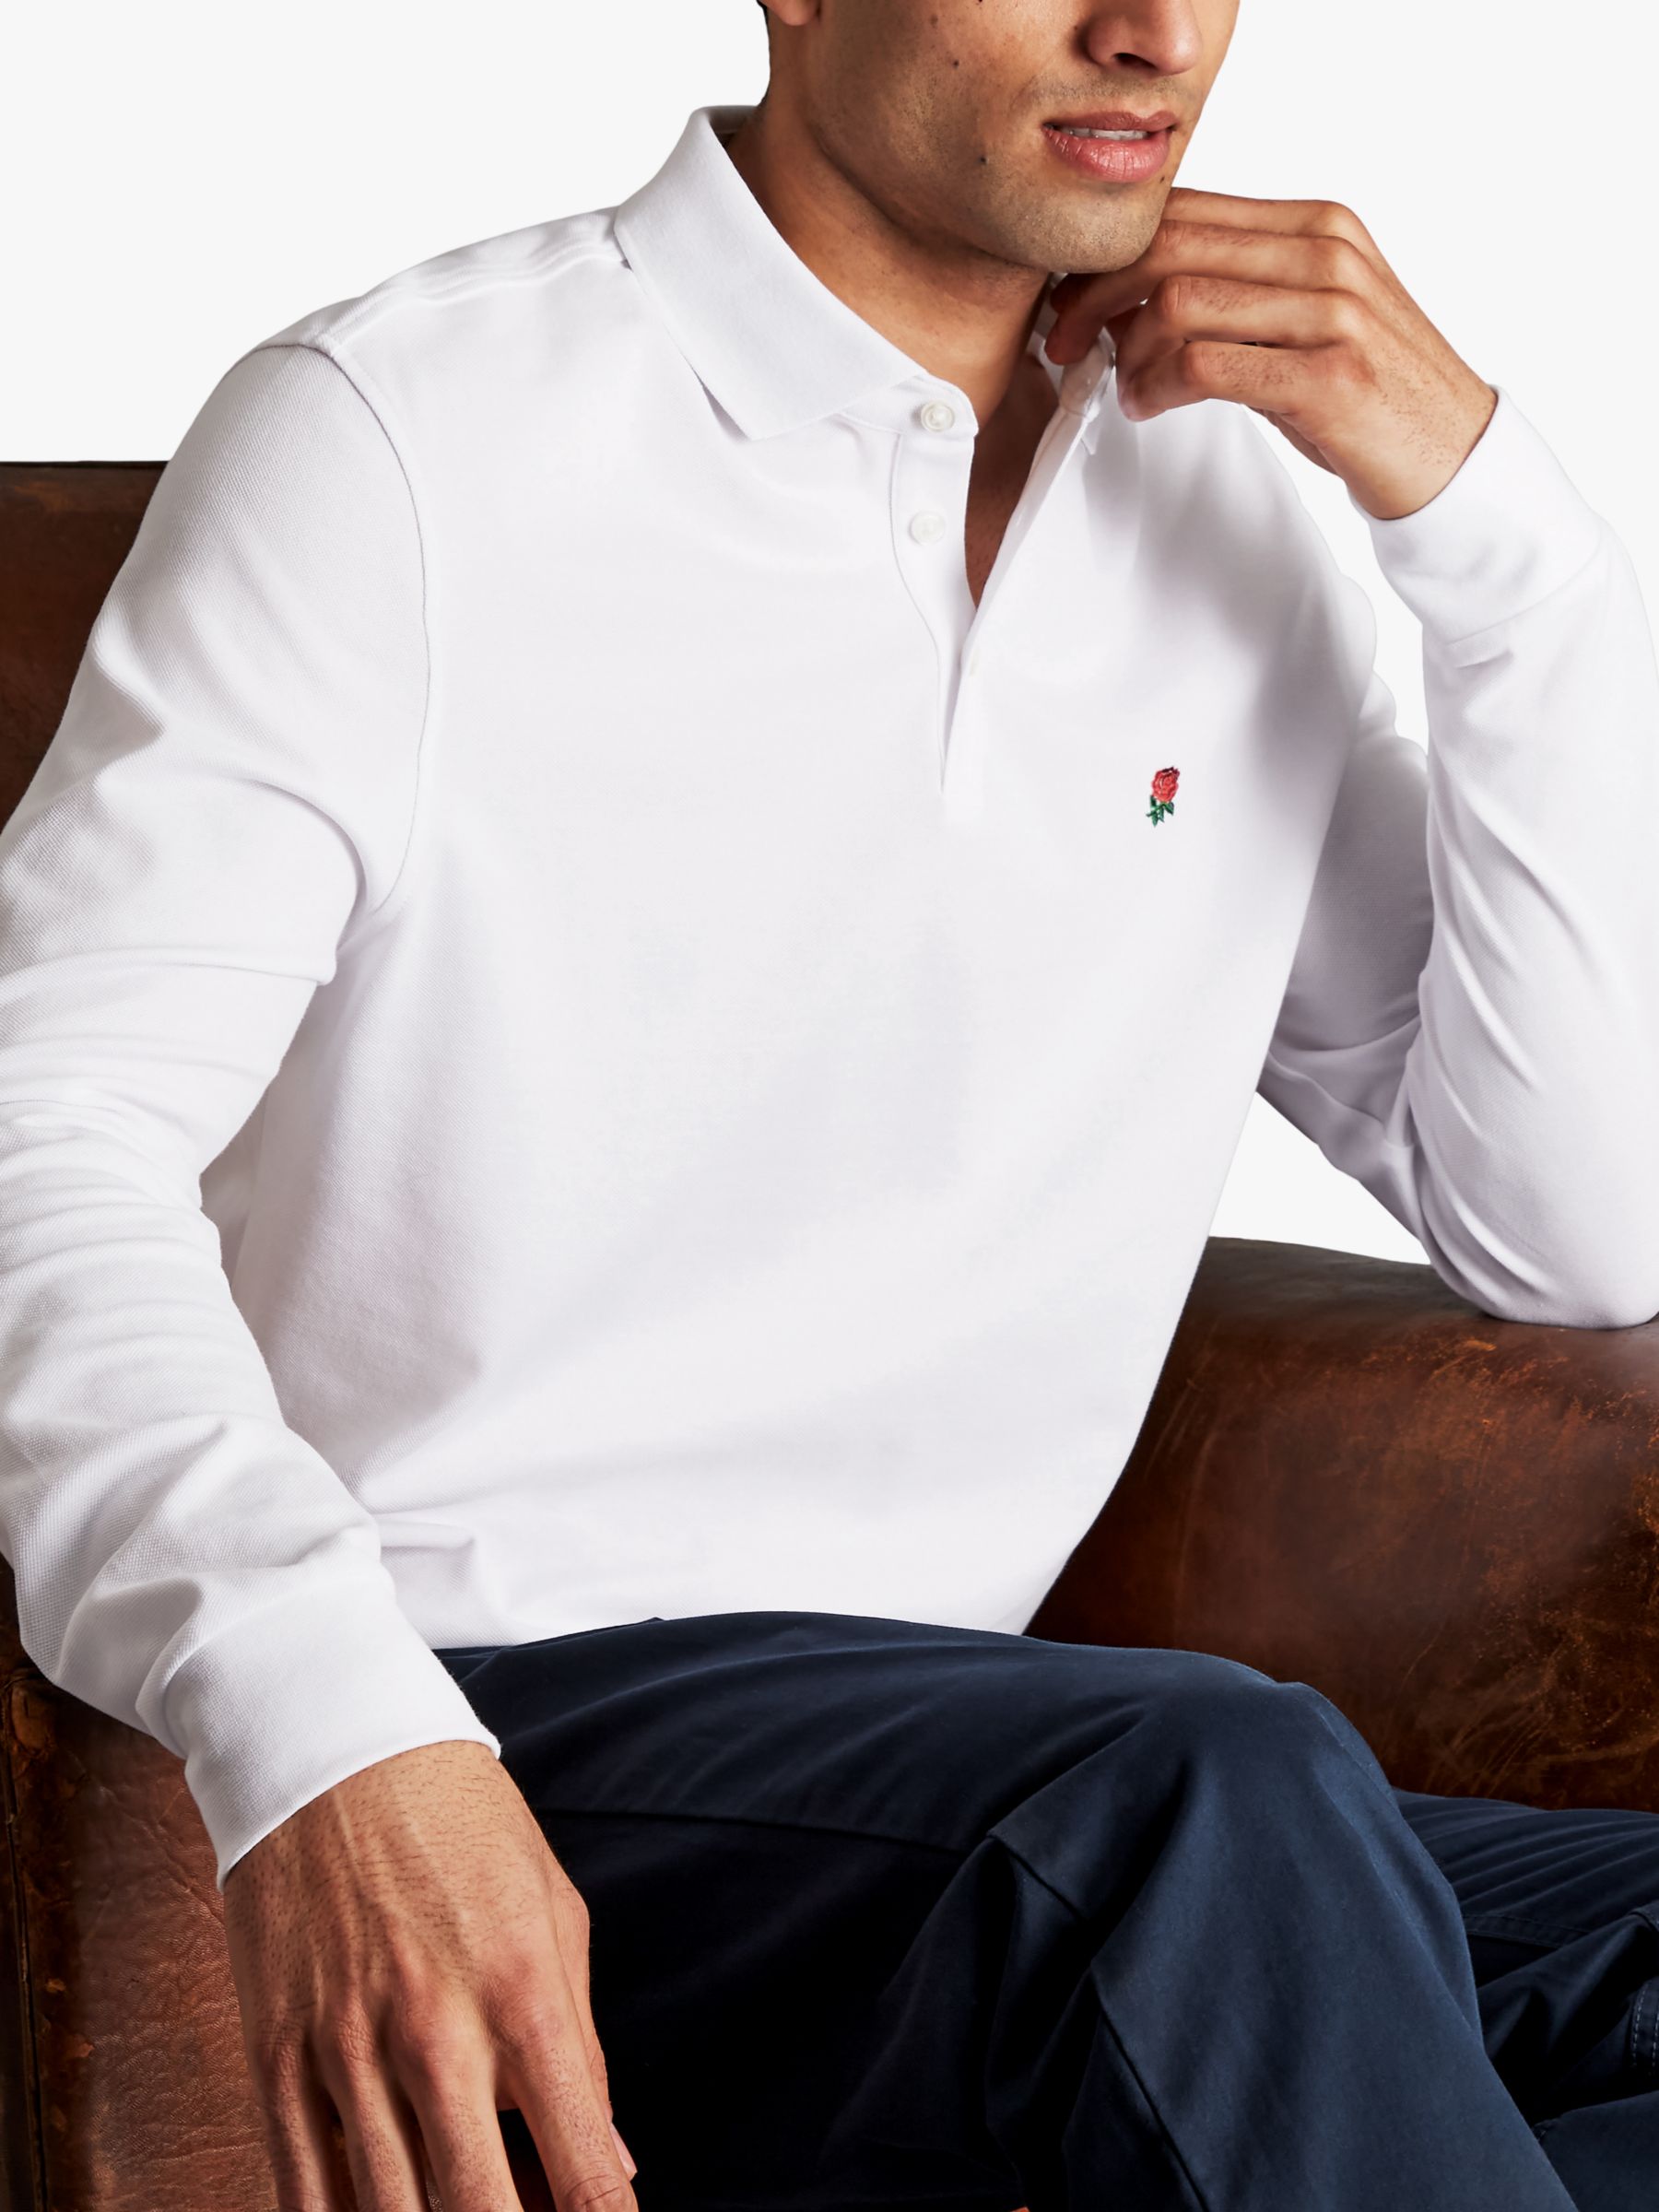 Charles Tyrwhitt England Rugby Long Sleeve Pique Polo Shirt, White, S